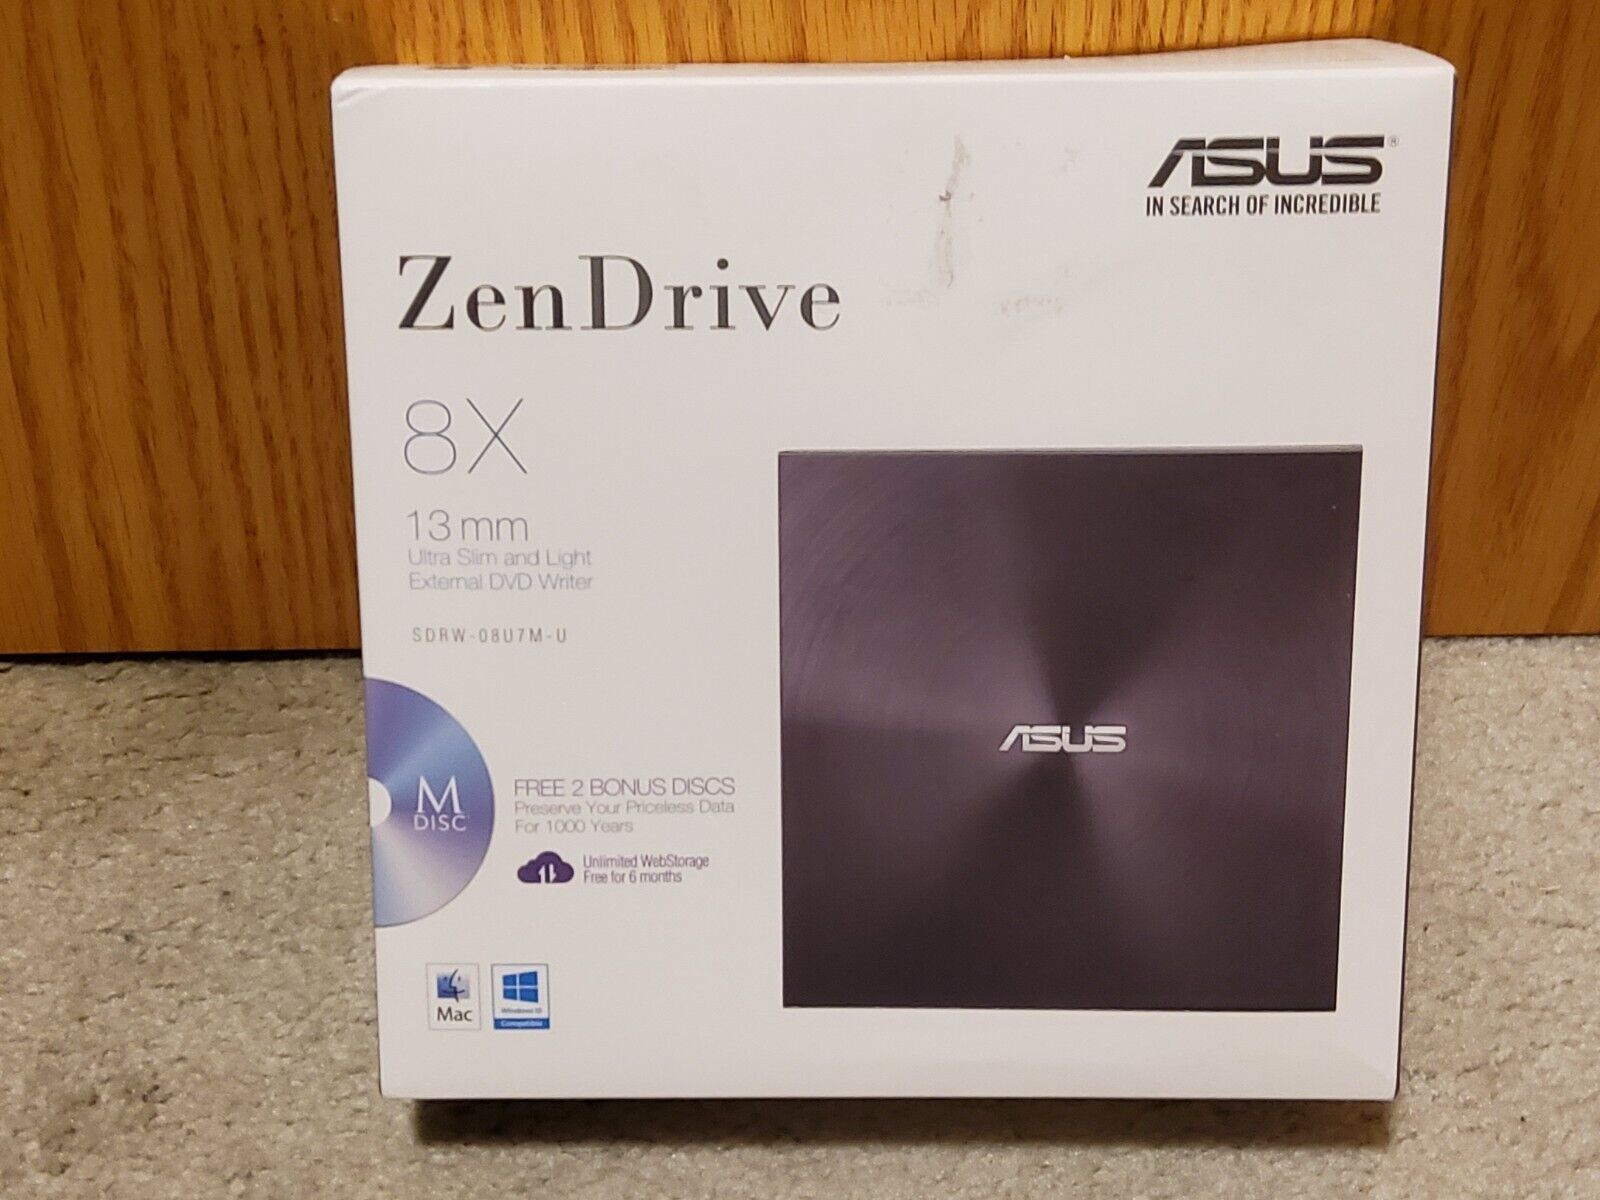 Asus ZenDrive 8X, 13mm Ultra Slim and Light External DVD Writer, SDRW-08U7M-U